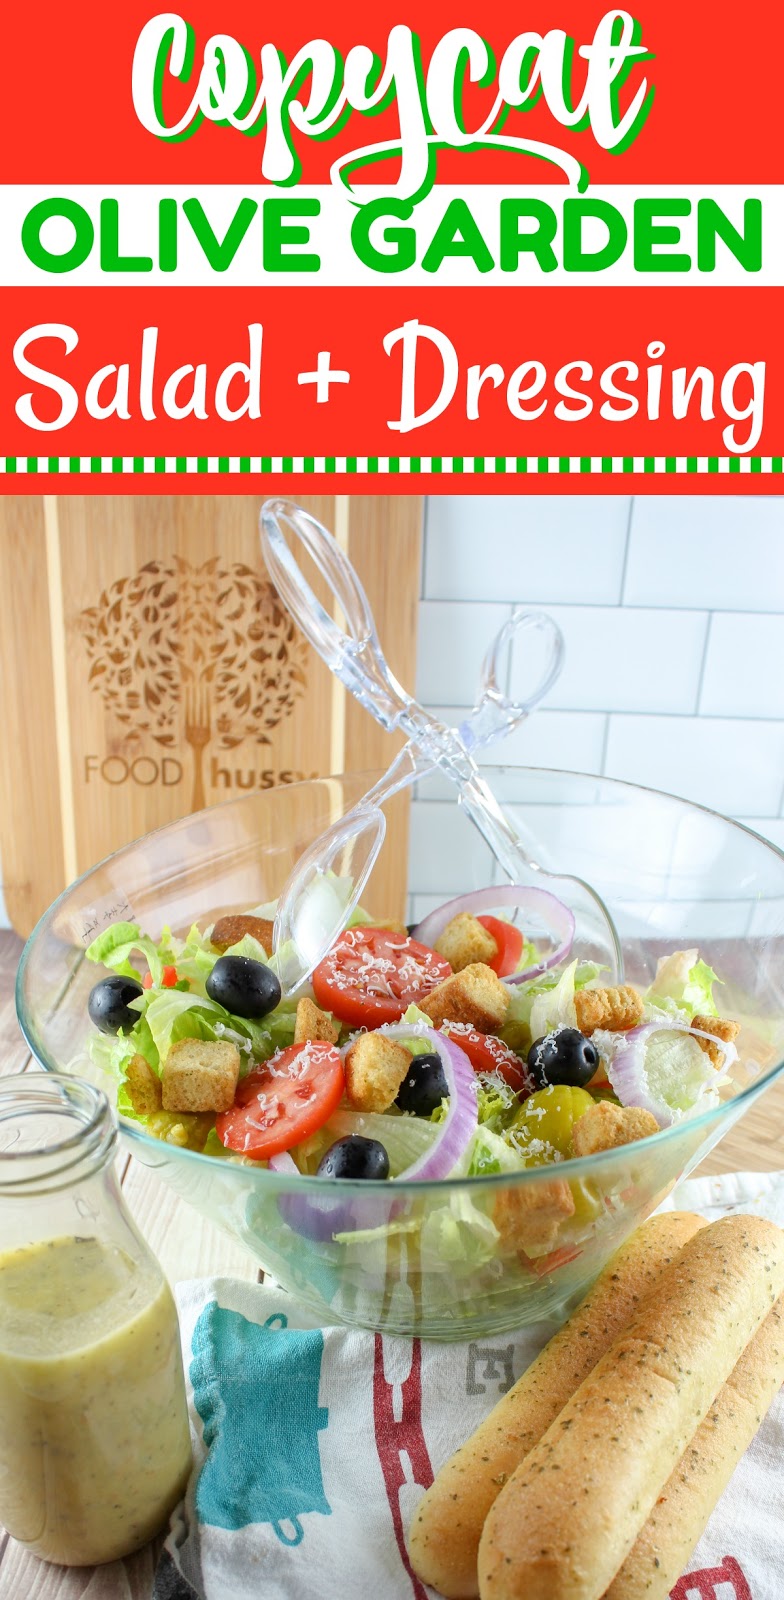 Recipe: Copycat Olive Garden Salad + Italian Dressing - The Food Hussy